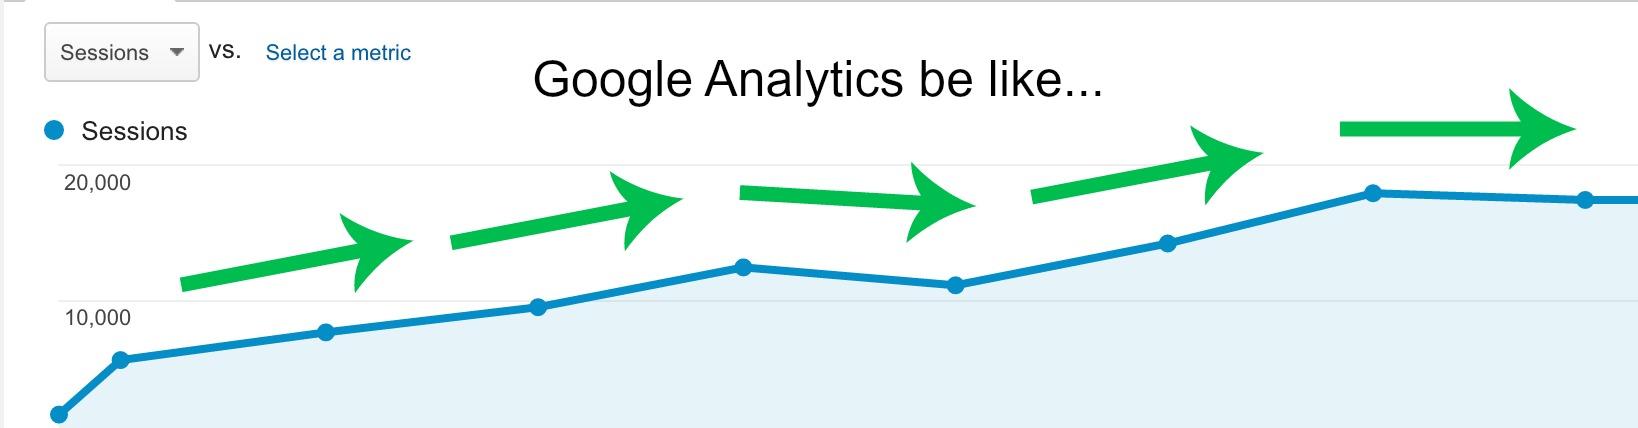 Screenshot showing Google Analytics displaying different results